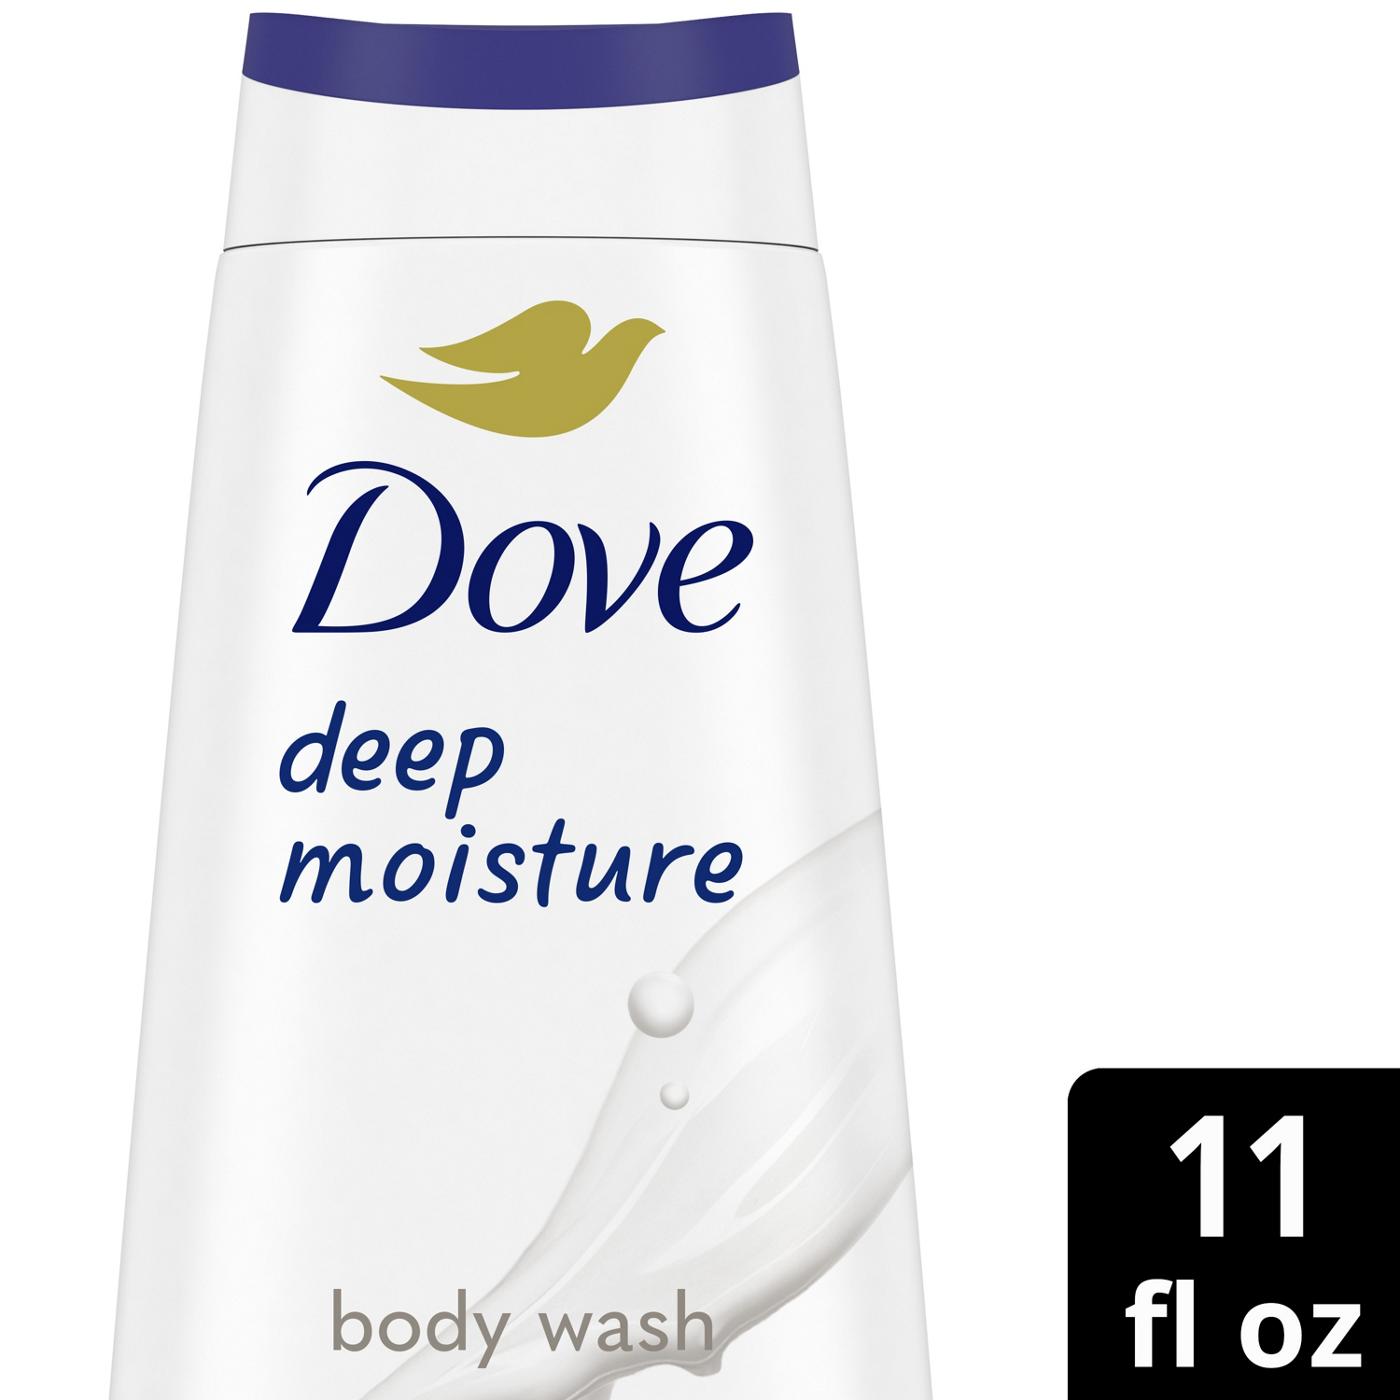 Dove Deep Moisture Body Wash; image 2 of 2